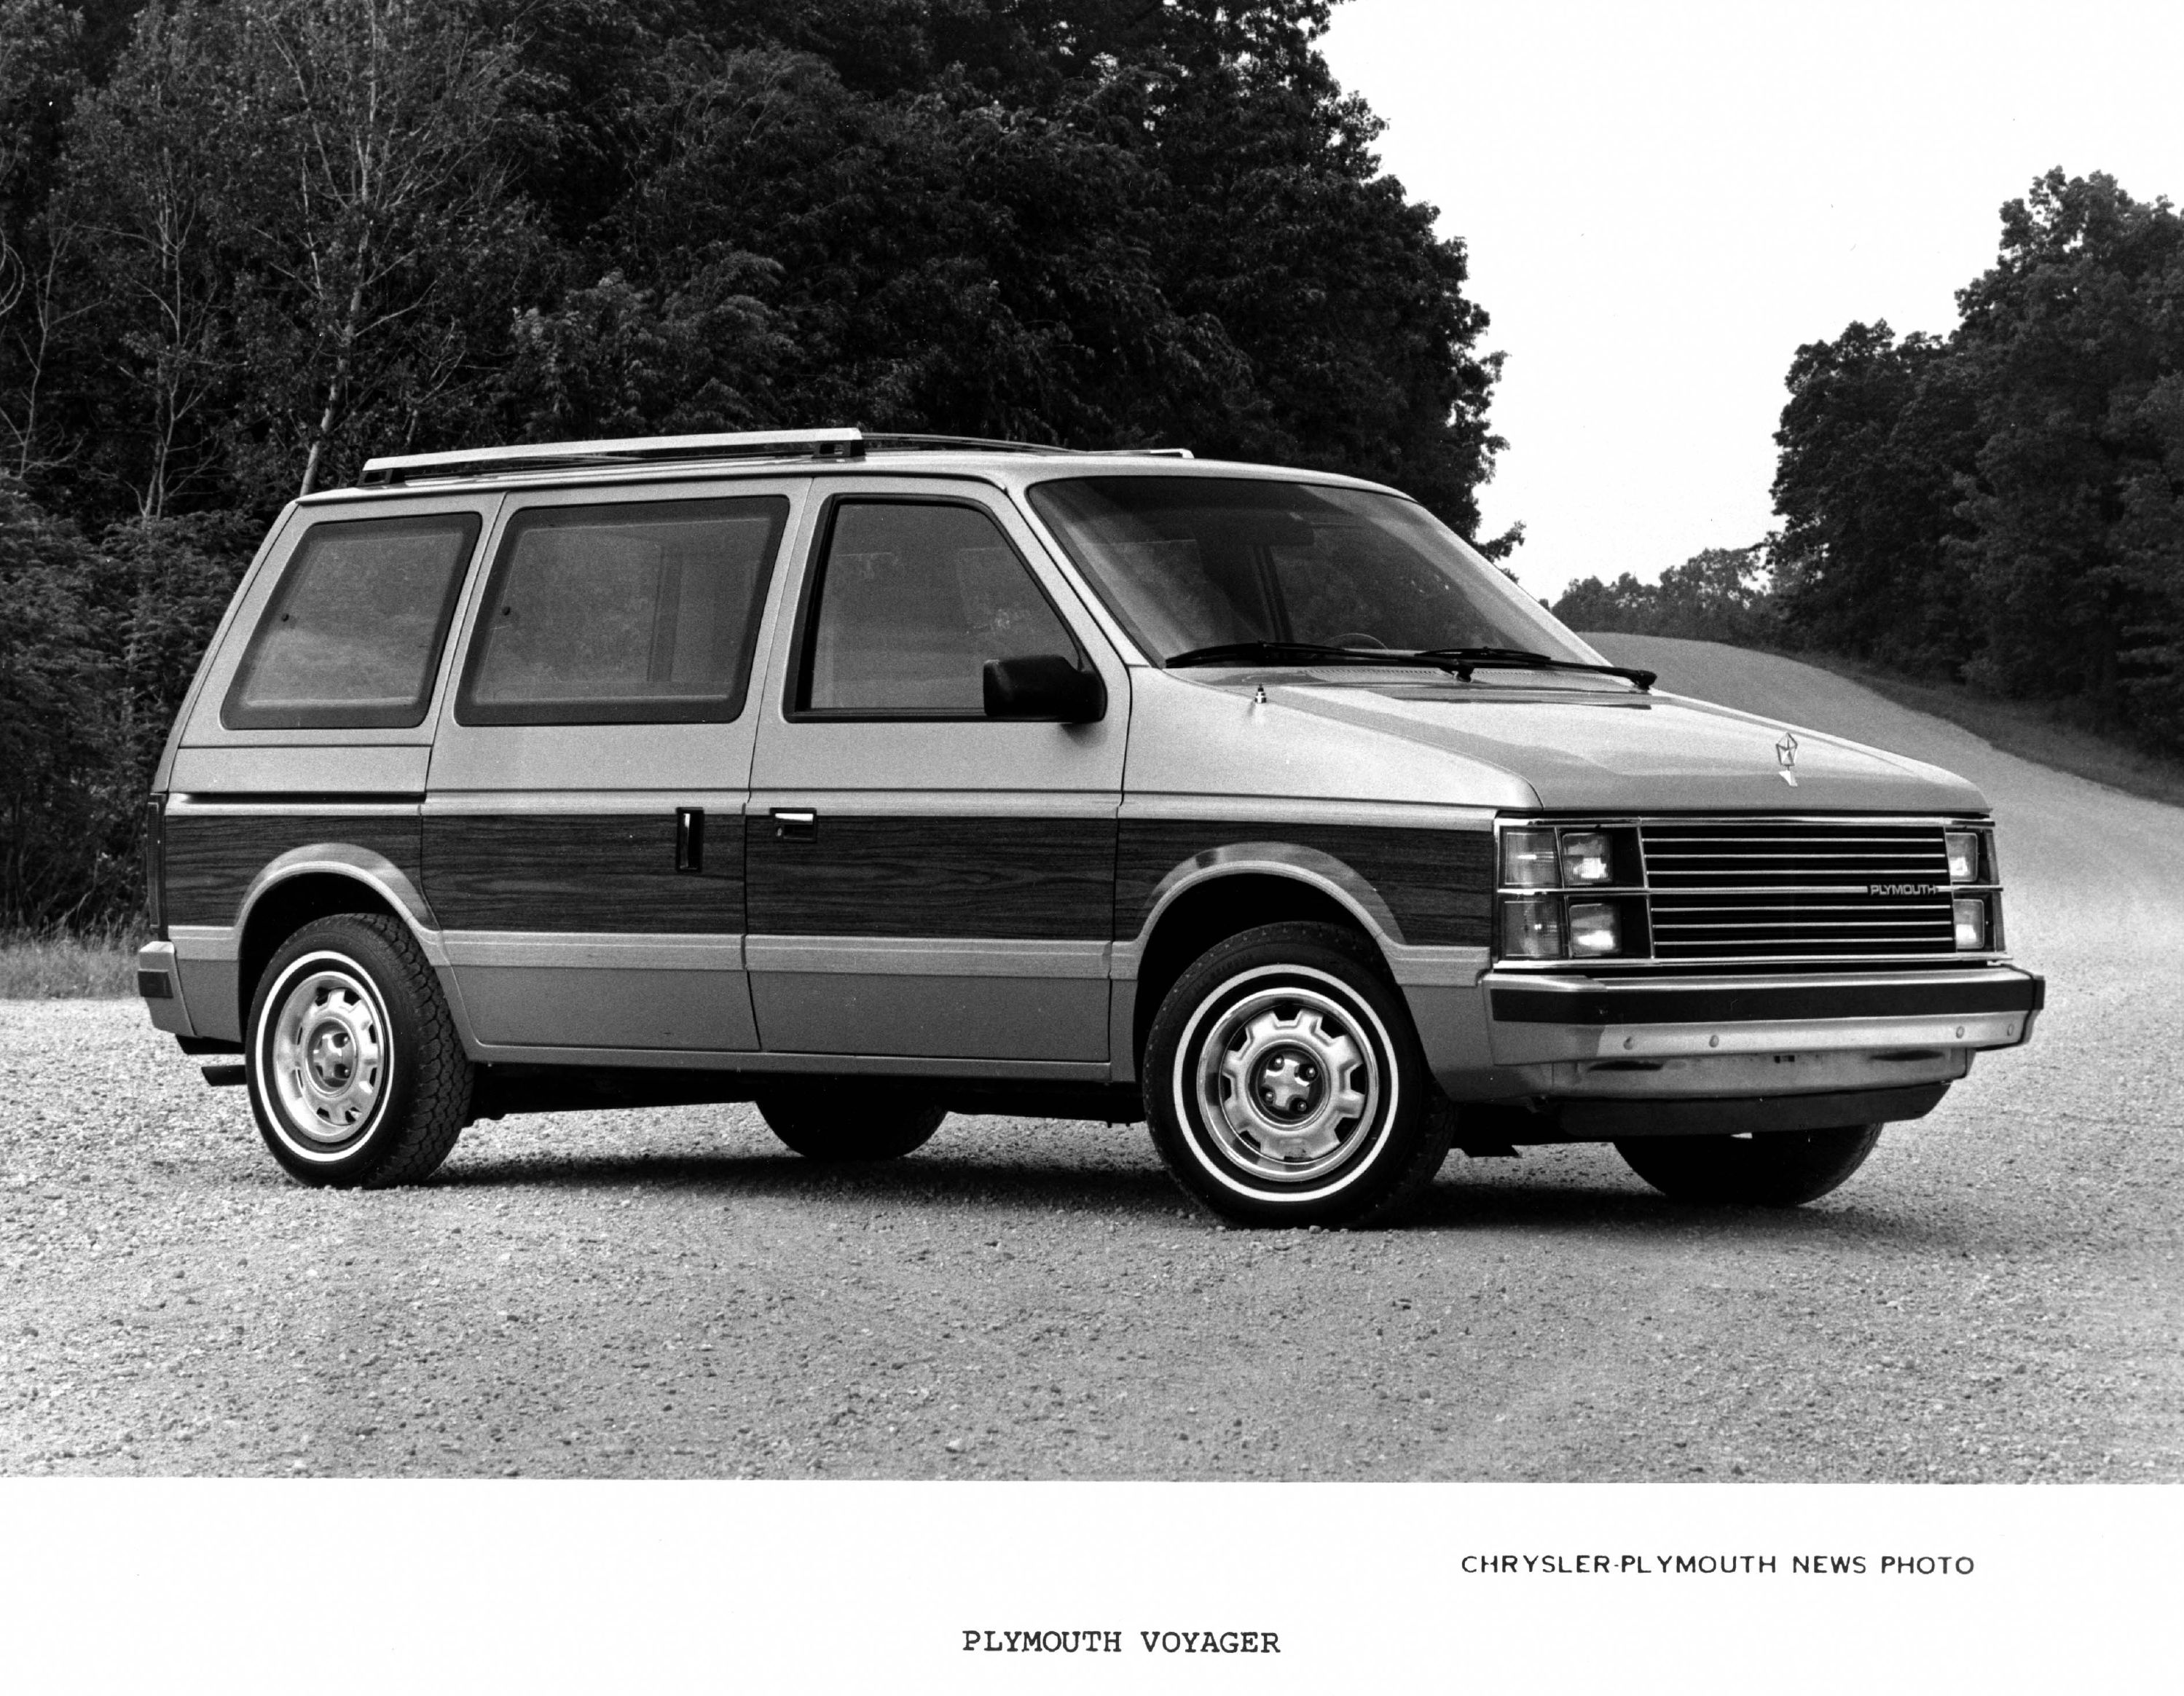 1980s family cars